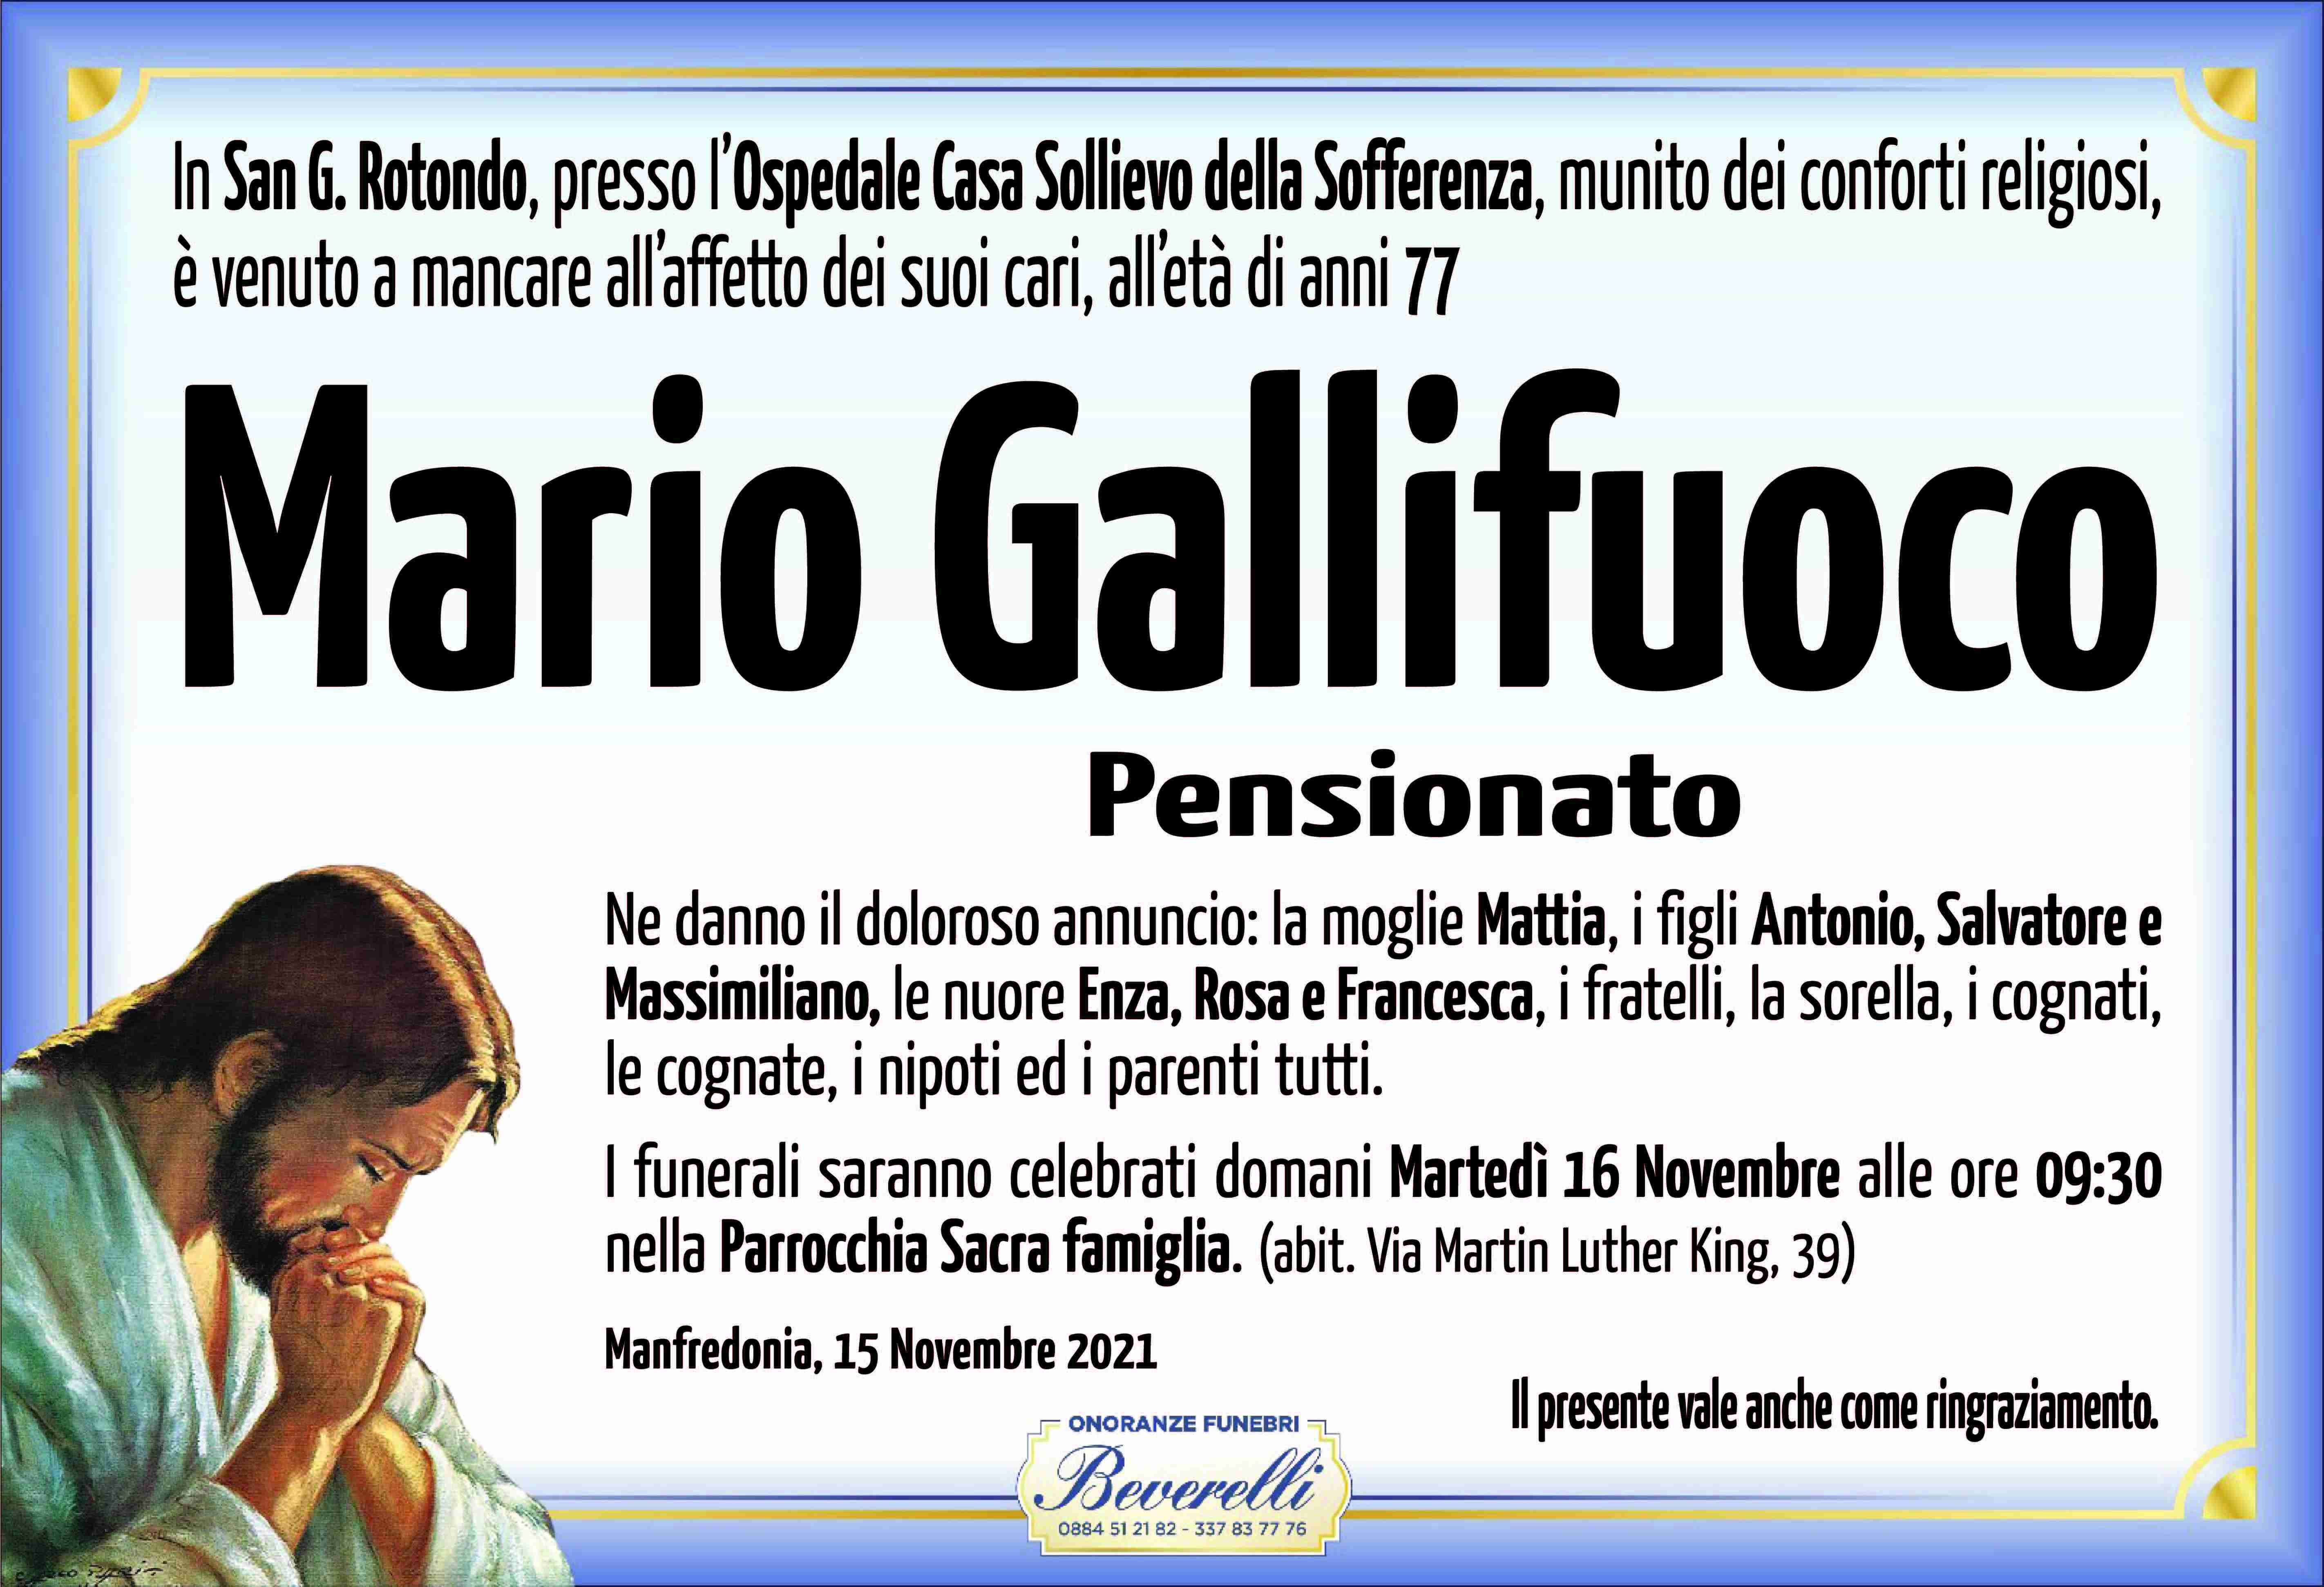 Mario Gallifuoco